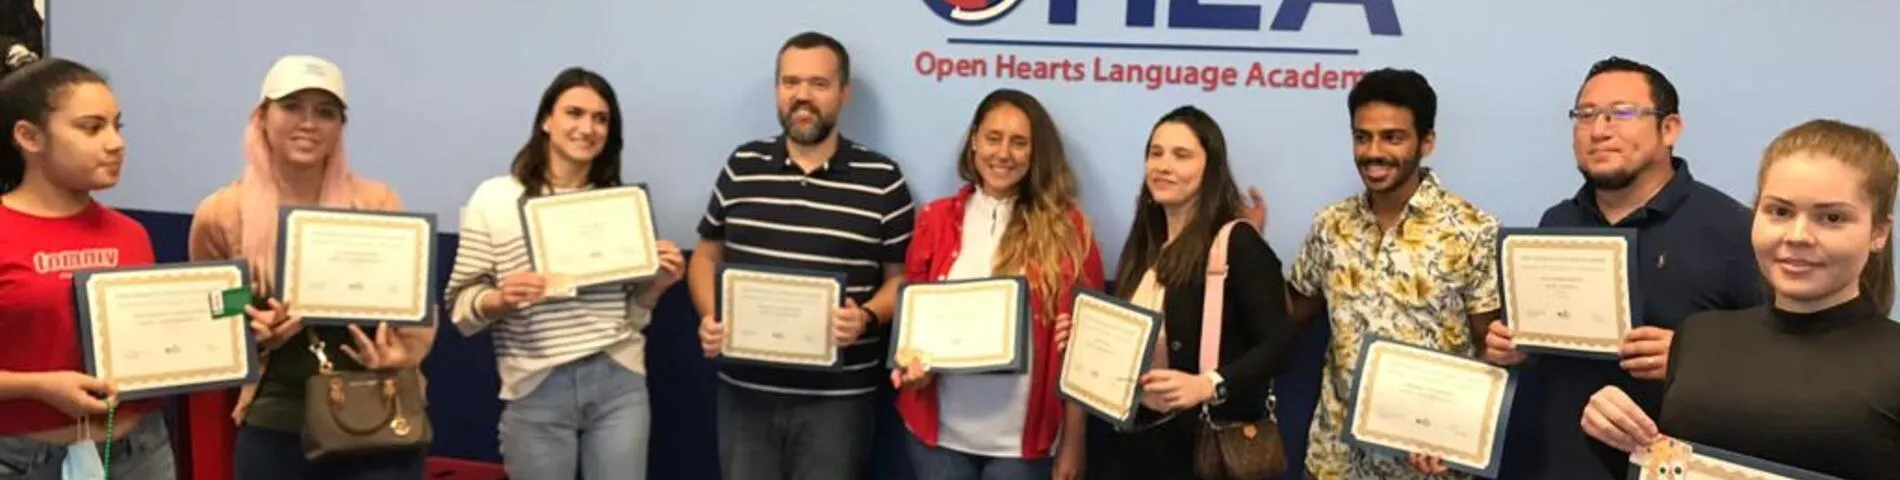 Open Hearts Language Academy bild 1